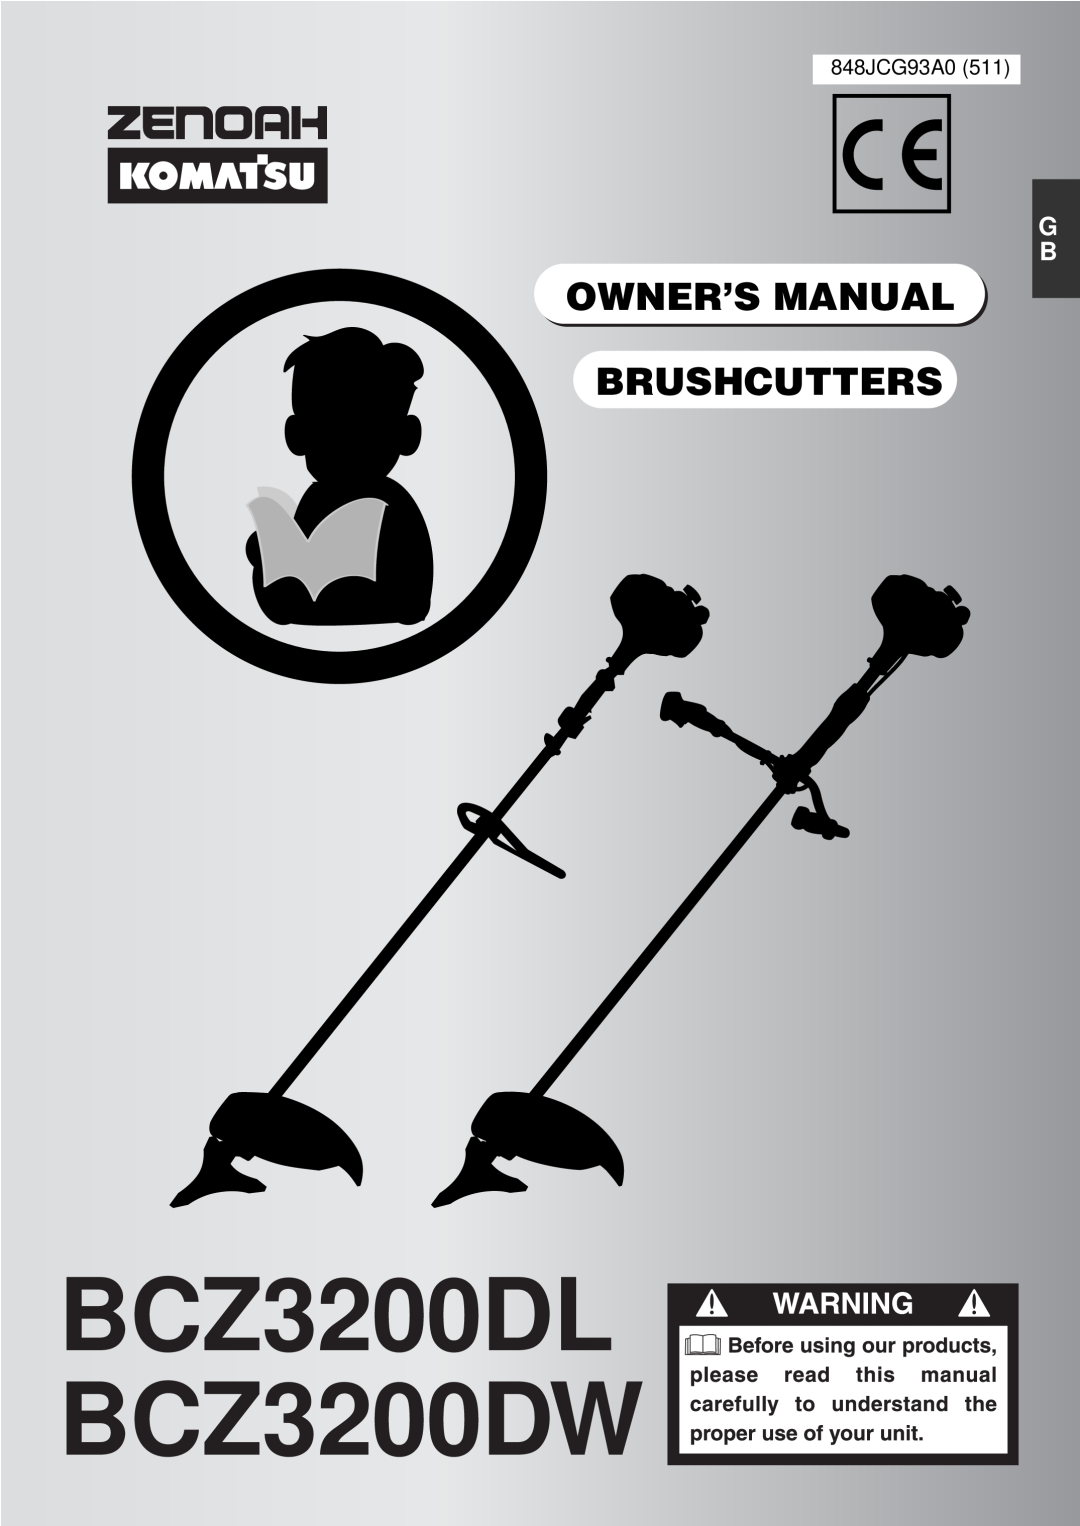 Zenoah owner manual BCZ3200DL BCZ3200DW, 848JCG93A0 